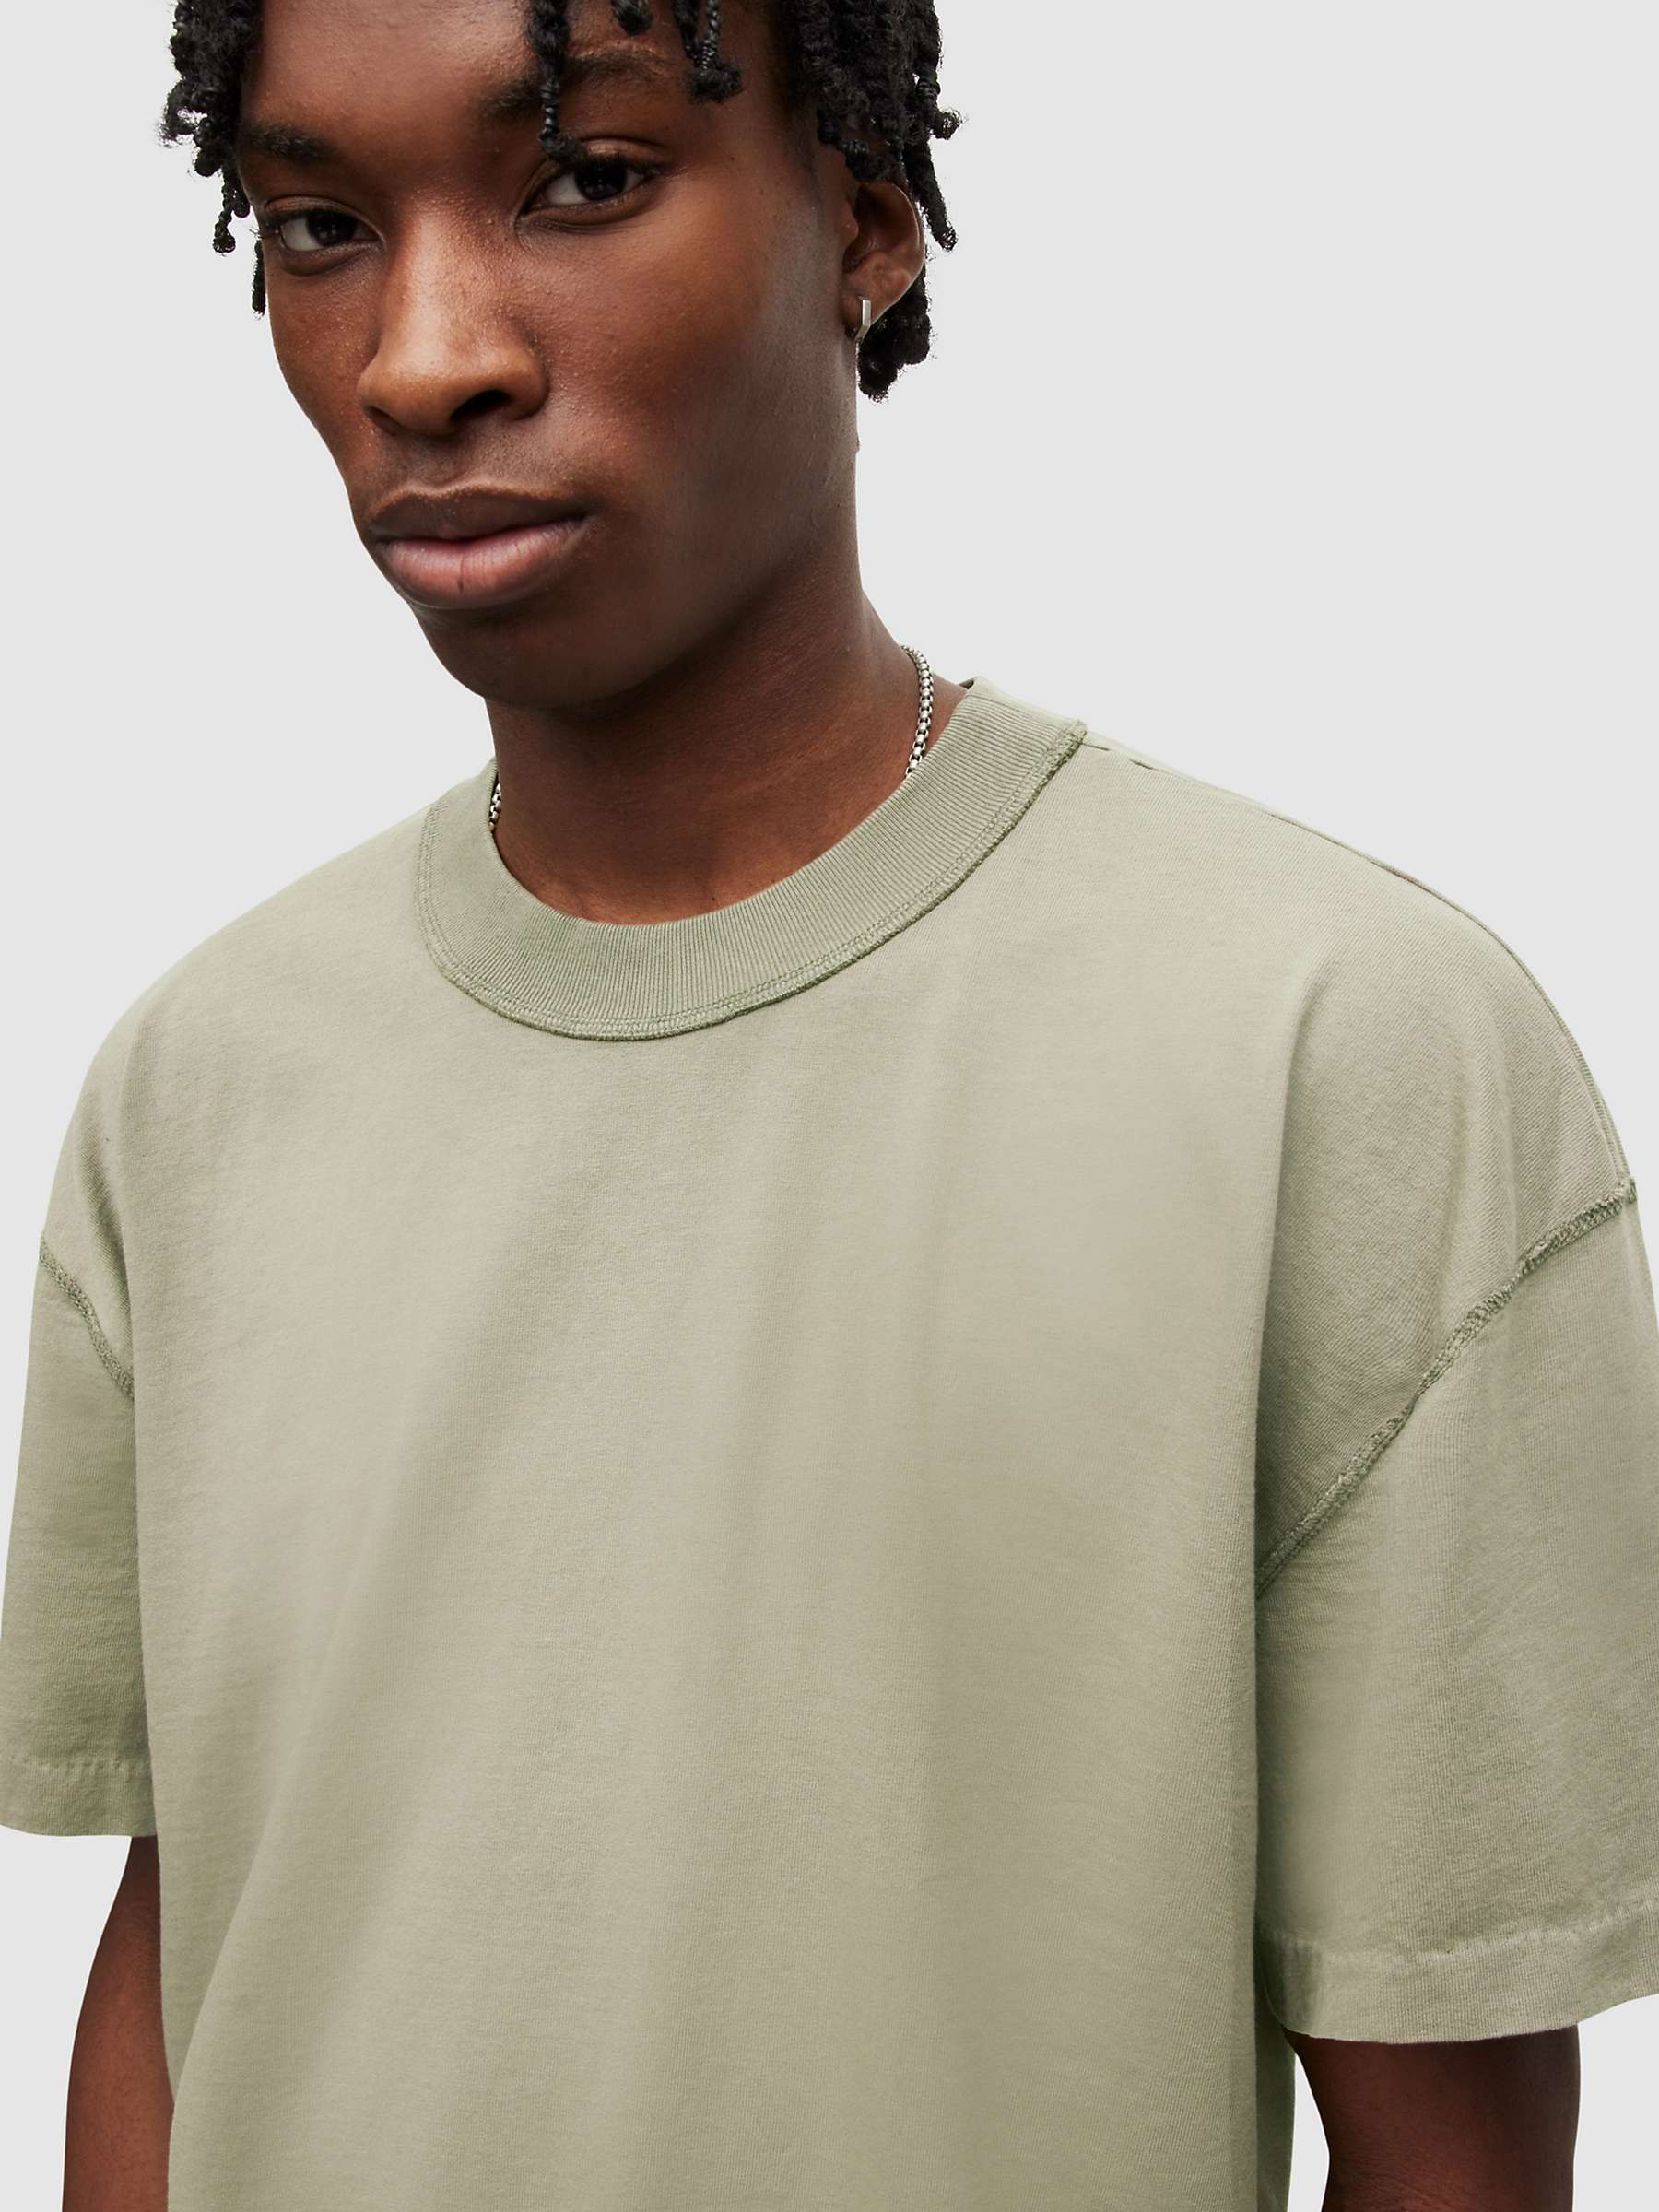 Buy AllSaints Isac Short Sleeve Crew Neck T-Shirt Online at johnlewis.com